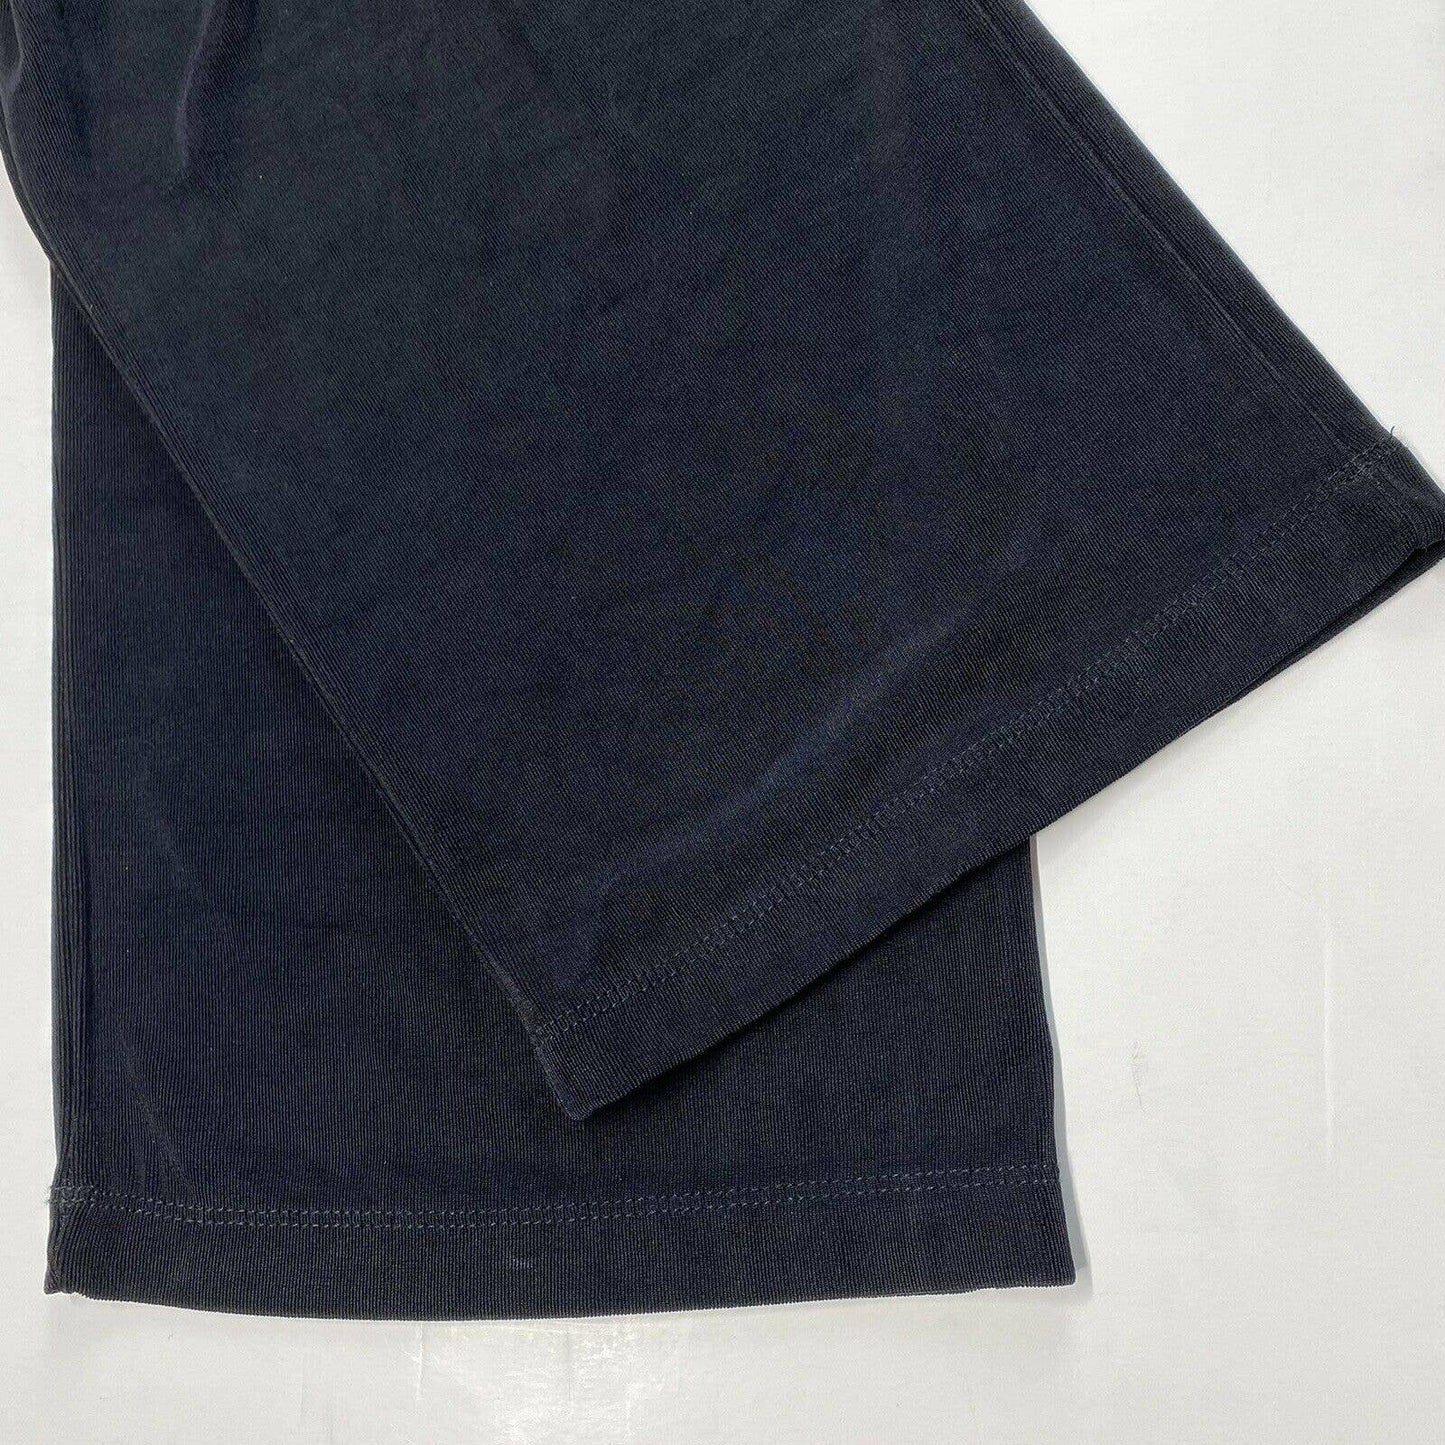 Picadilly Fashions Slinky Knit Straight Pant Sz Medium Black Stretch Acetate EUC